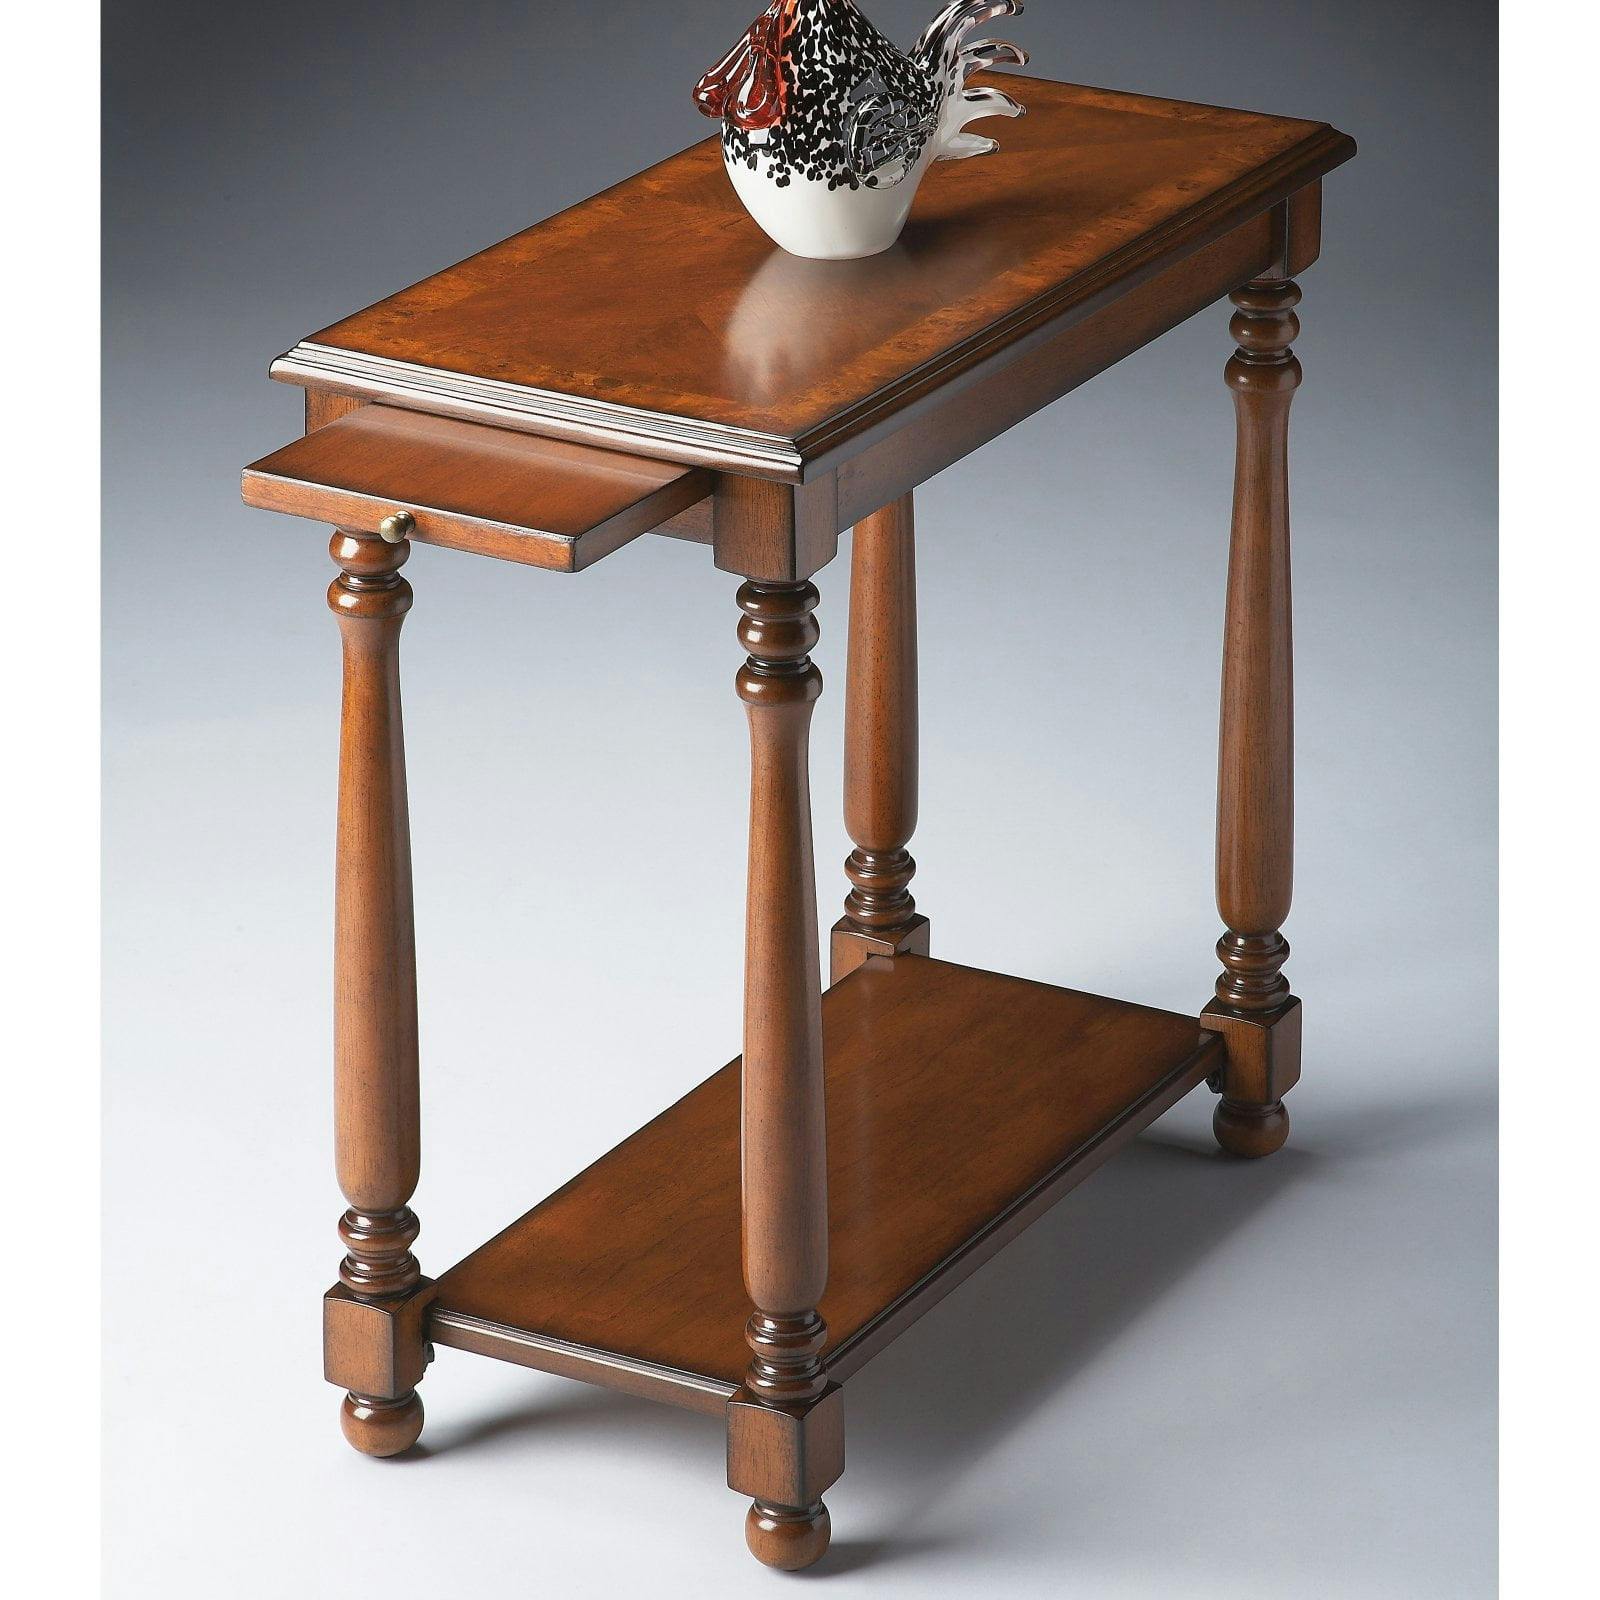 Devane Olive Ash Burl Rectangular Side Table with Storage